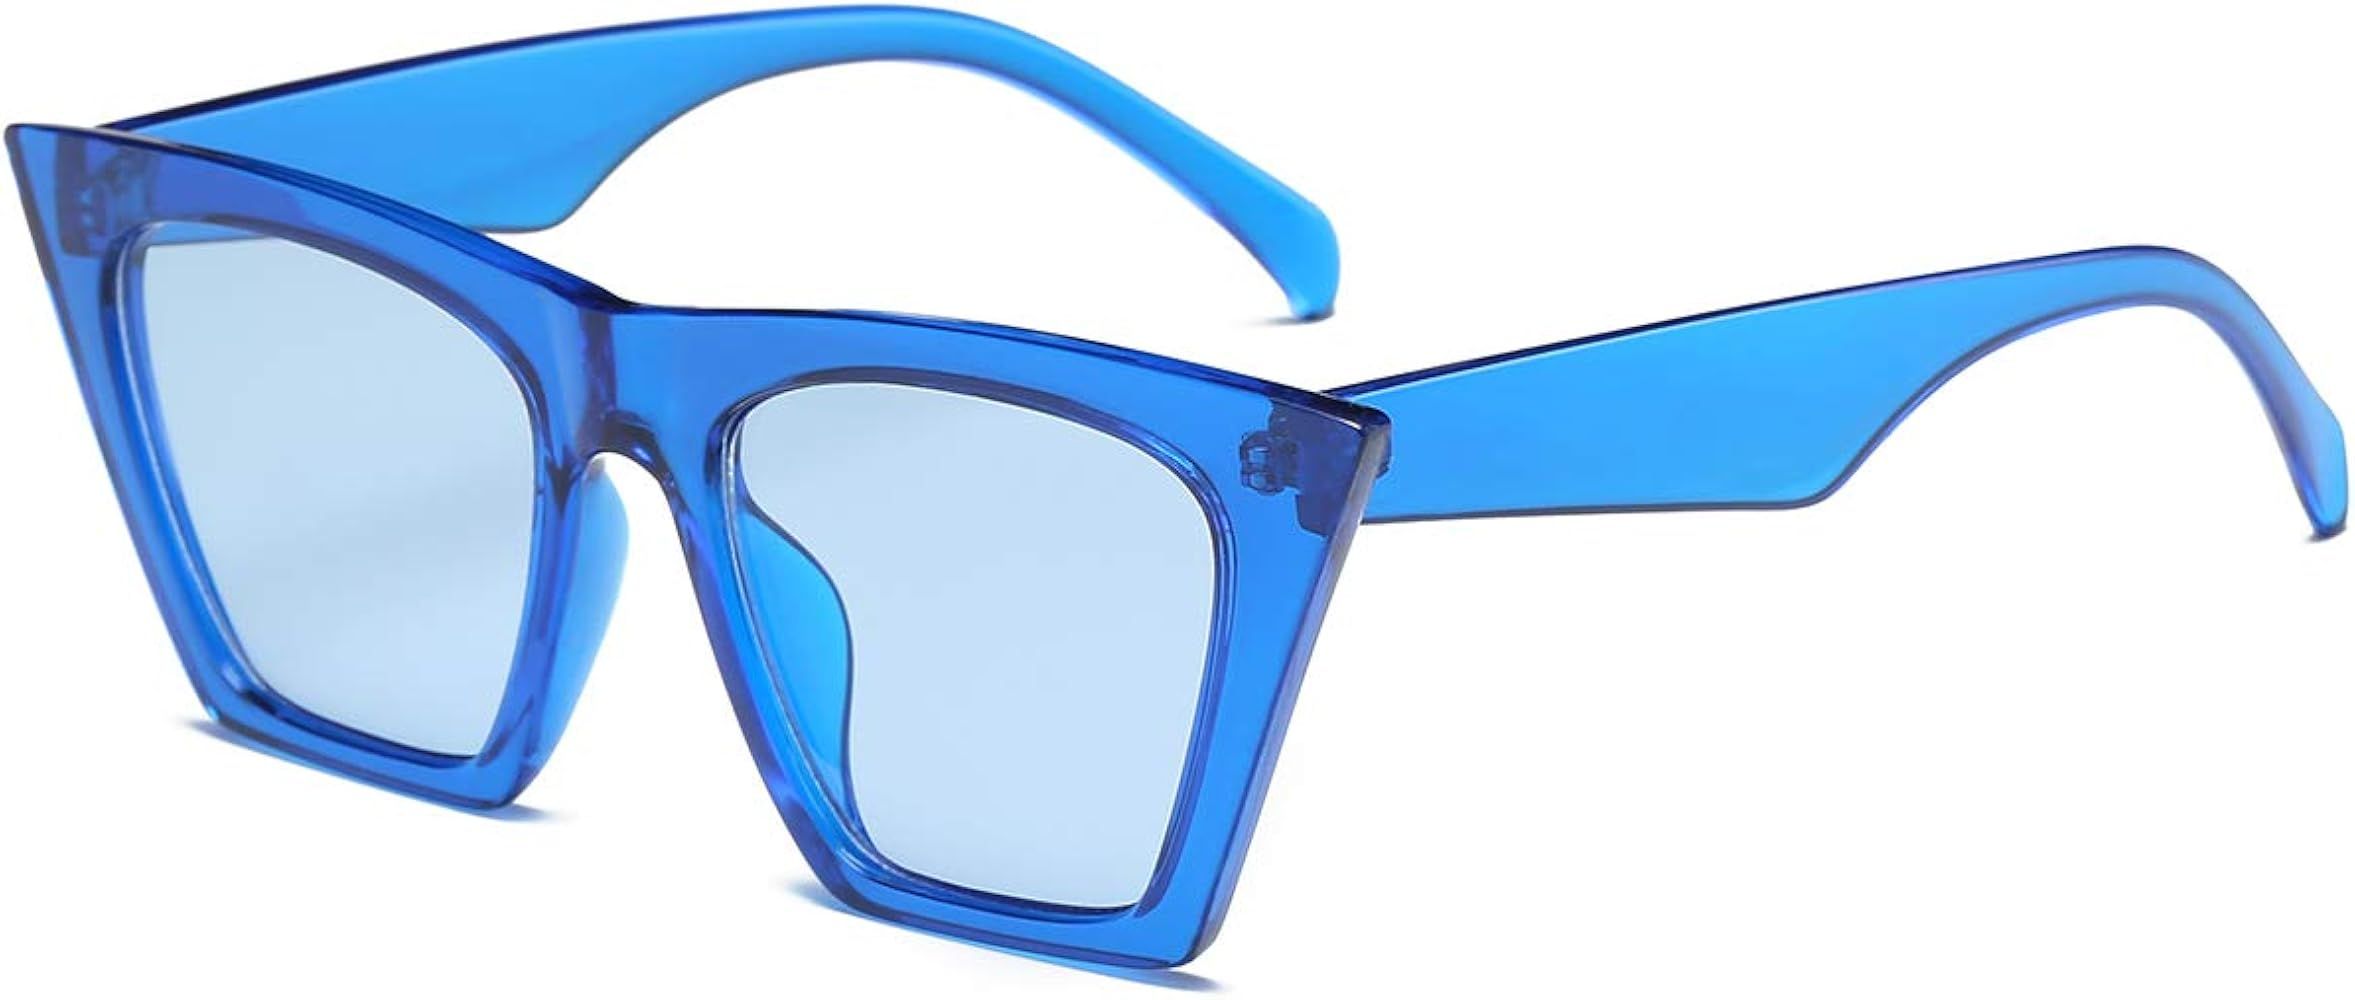 Square Cat Eye Sunglasses for Women Fashion Oversize Cateye Classic women Sunglasses | Amazon (US)